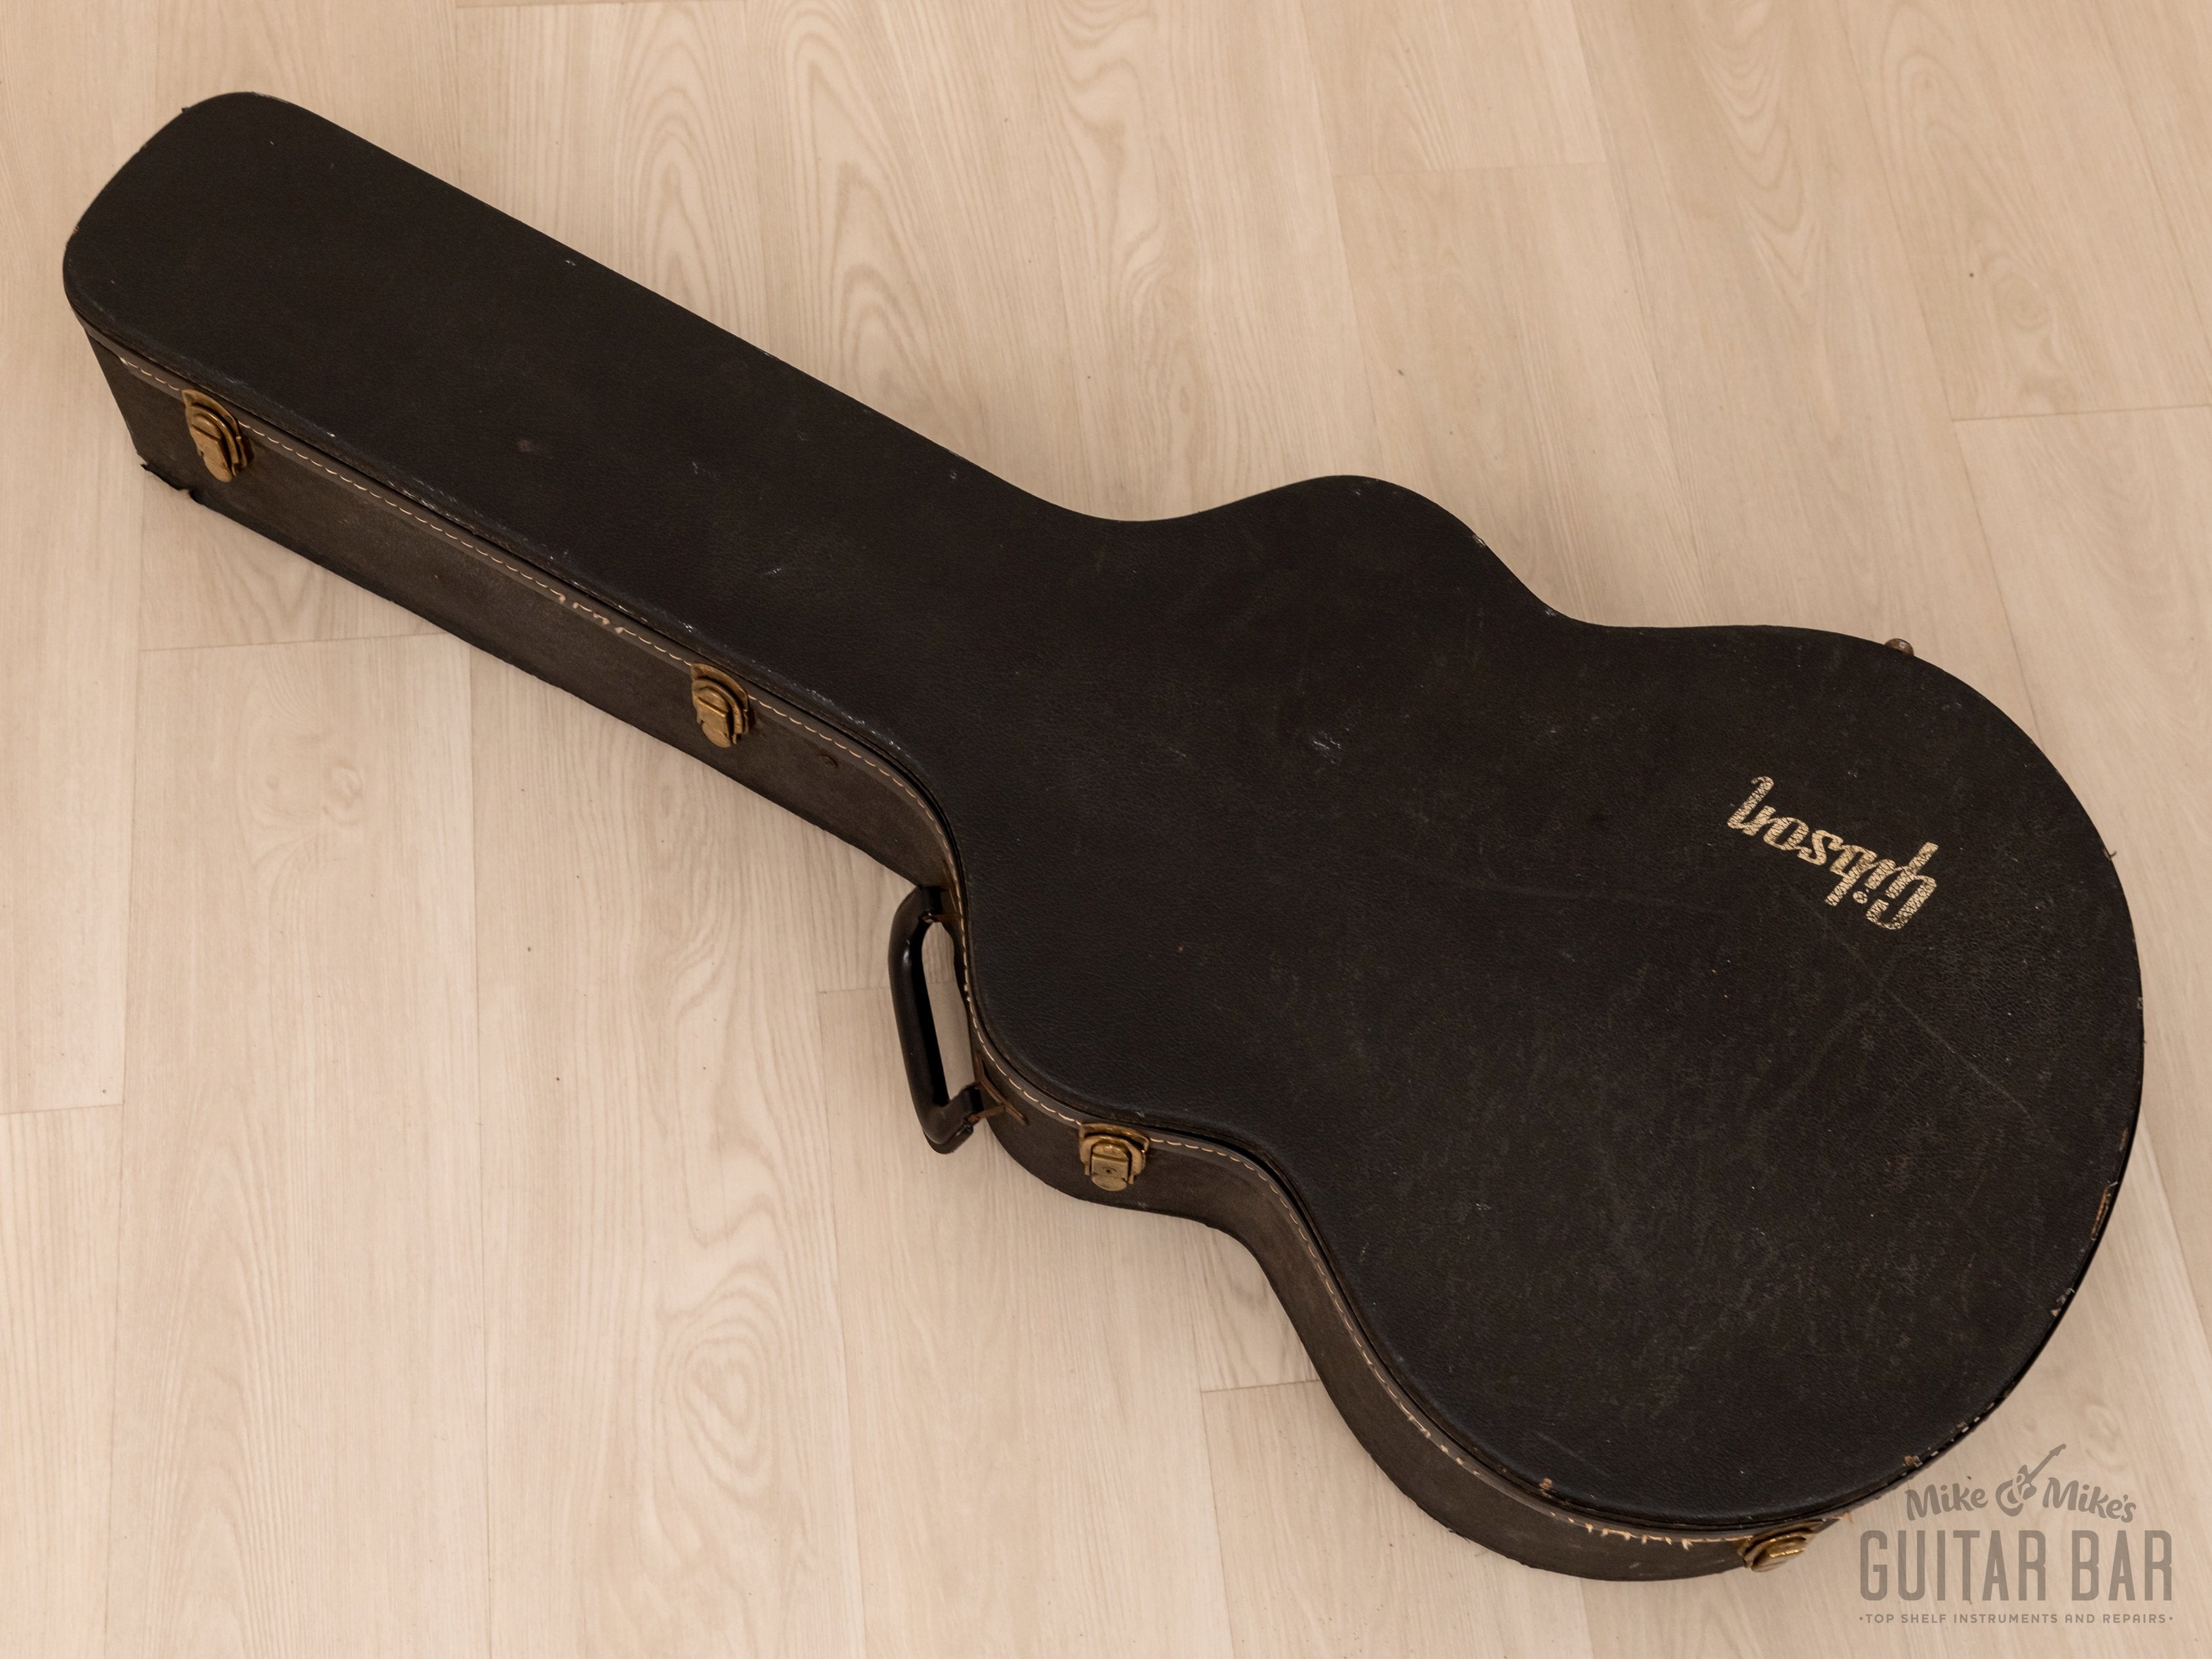 1965 Gibson J-200 Jumbo Vintage Acoustic Guitar Cherry Sunburst, Wide Nut w/ Case